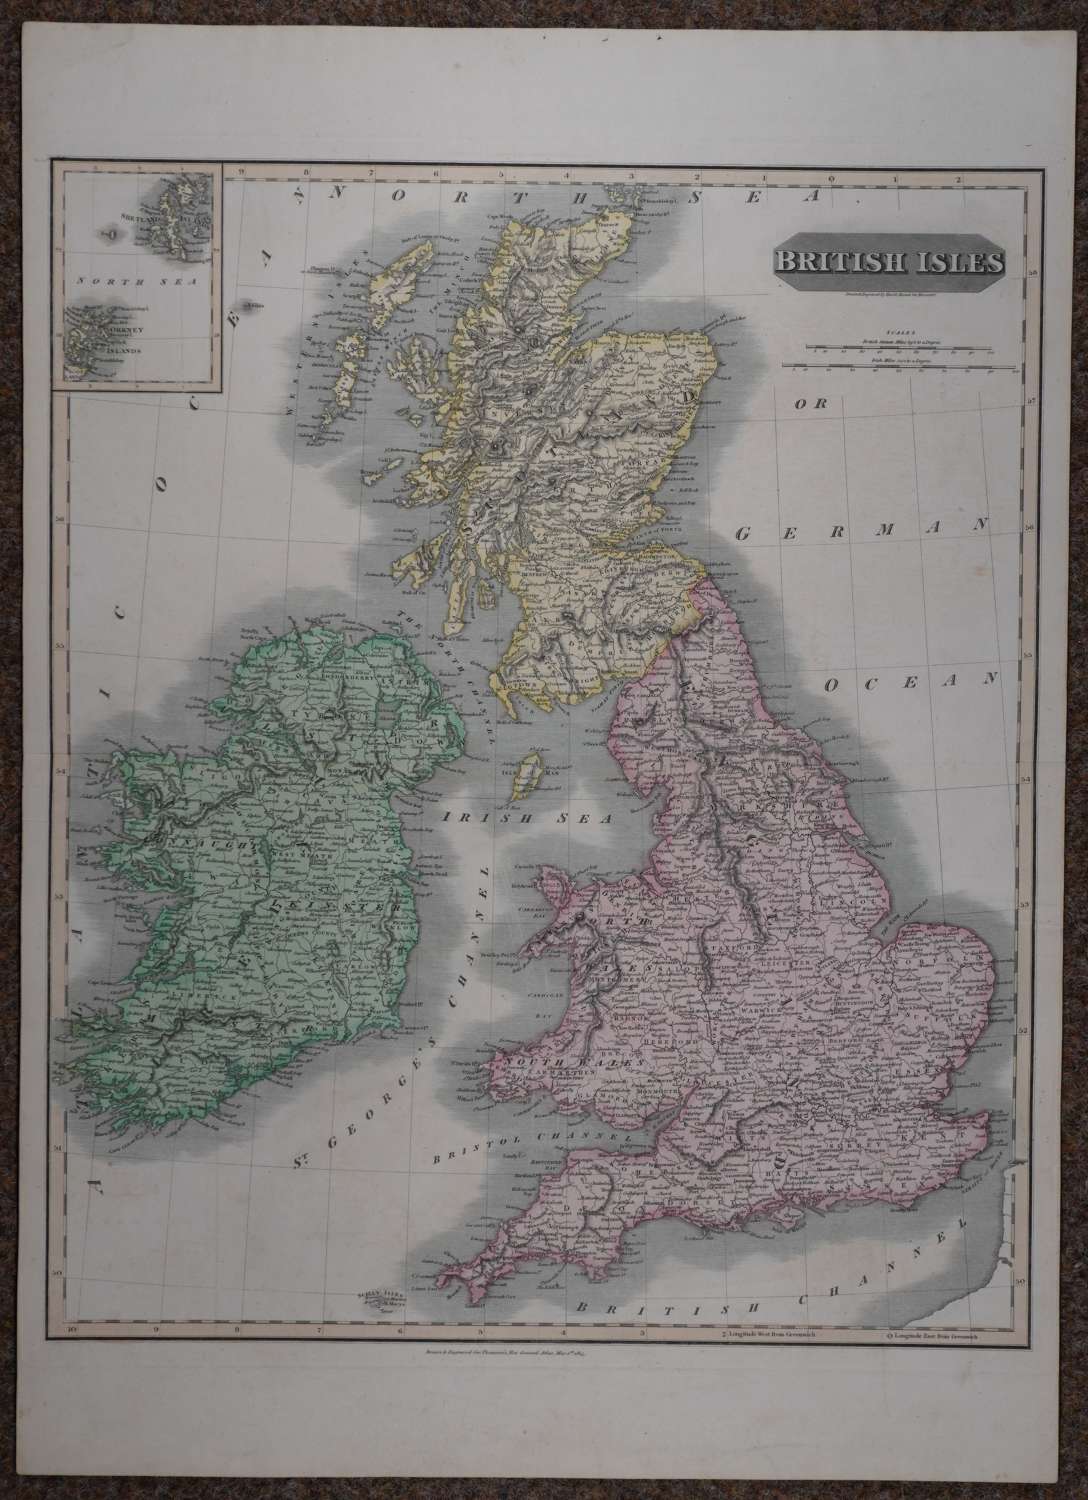 British Isles by John Thomson